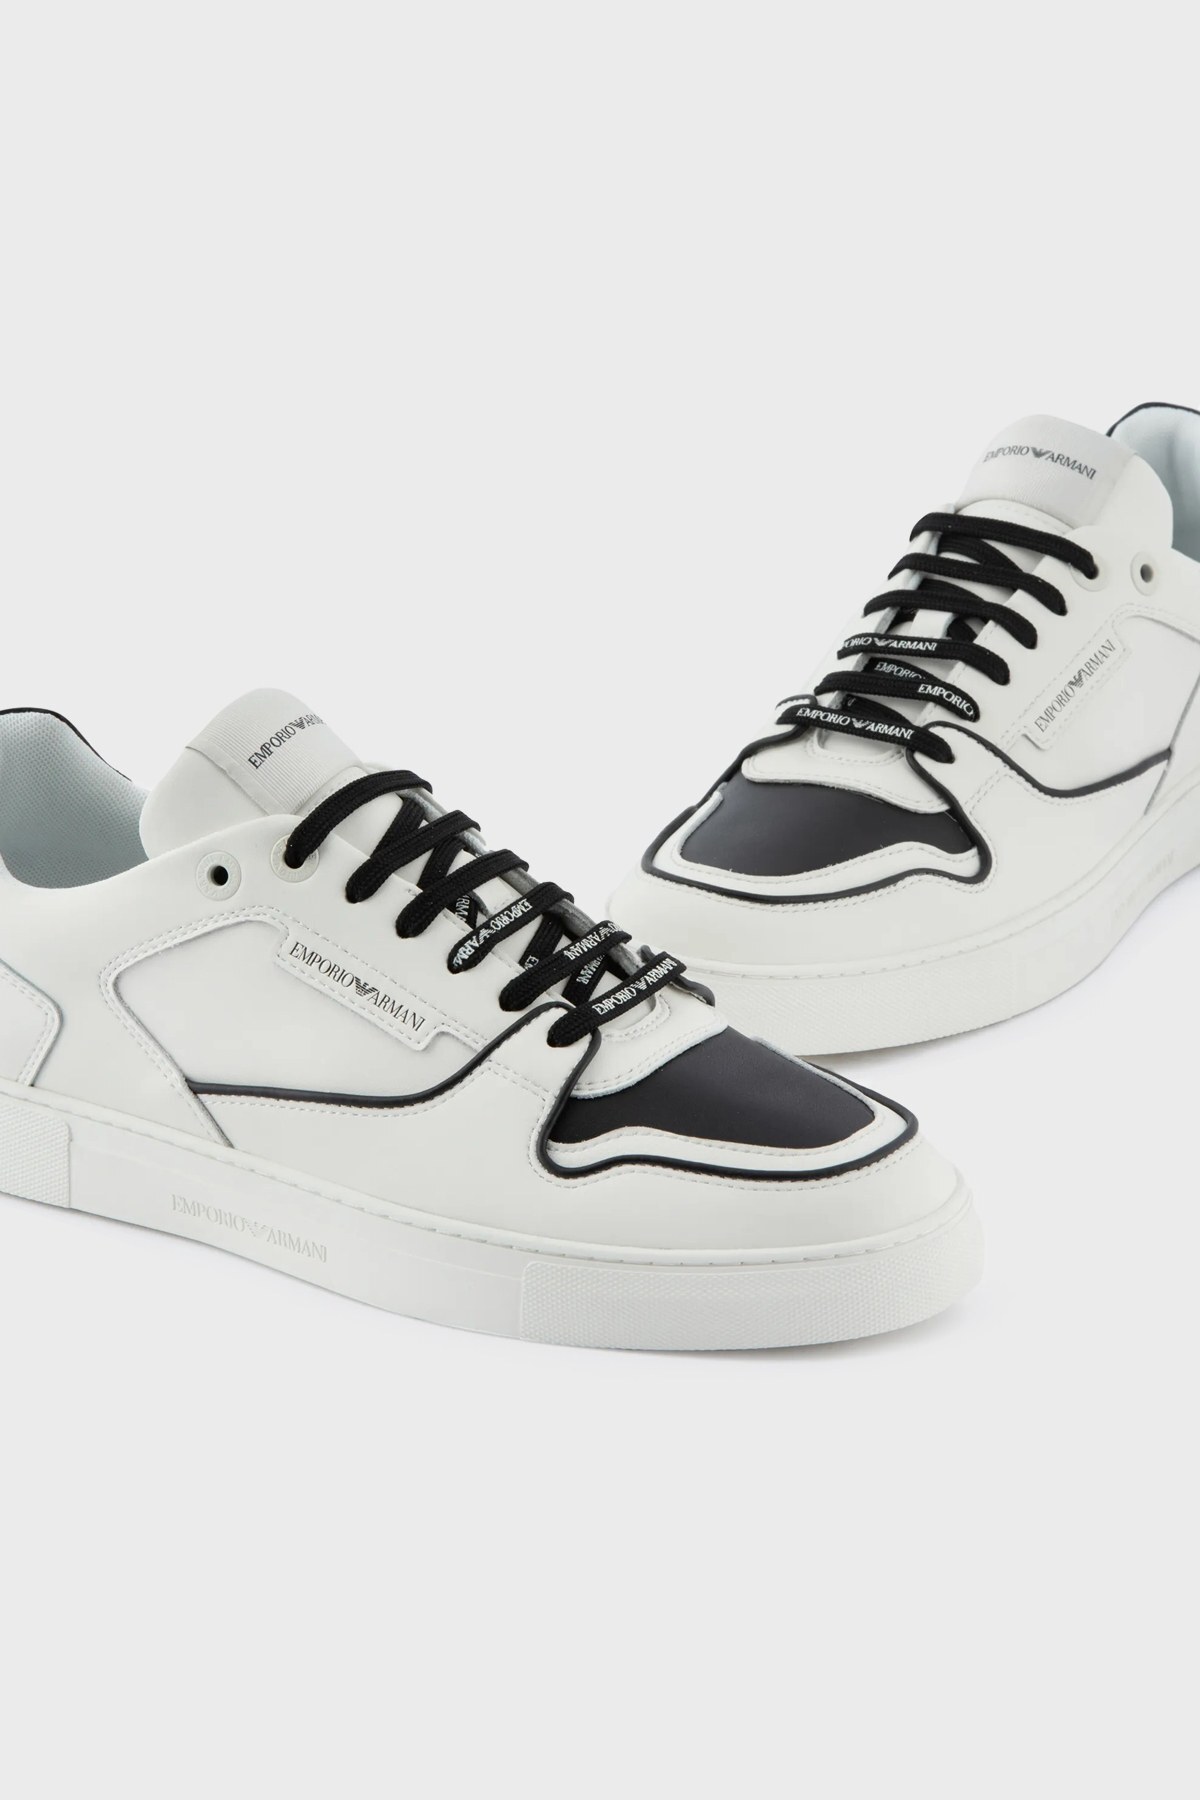 Emporio Armani Deri Sneaker Erkek Ayakkabı X4X549 XN185 Q815 BEYAZ-SİYAH